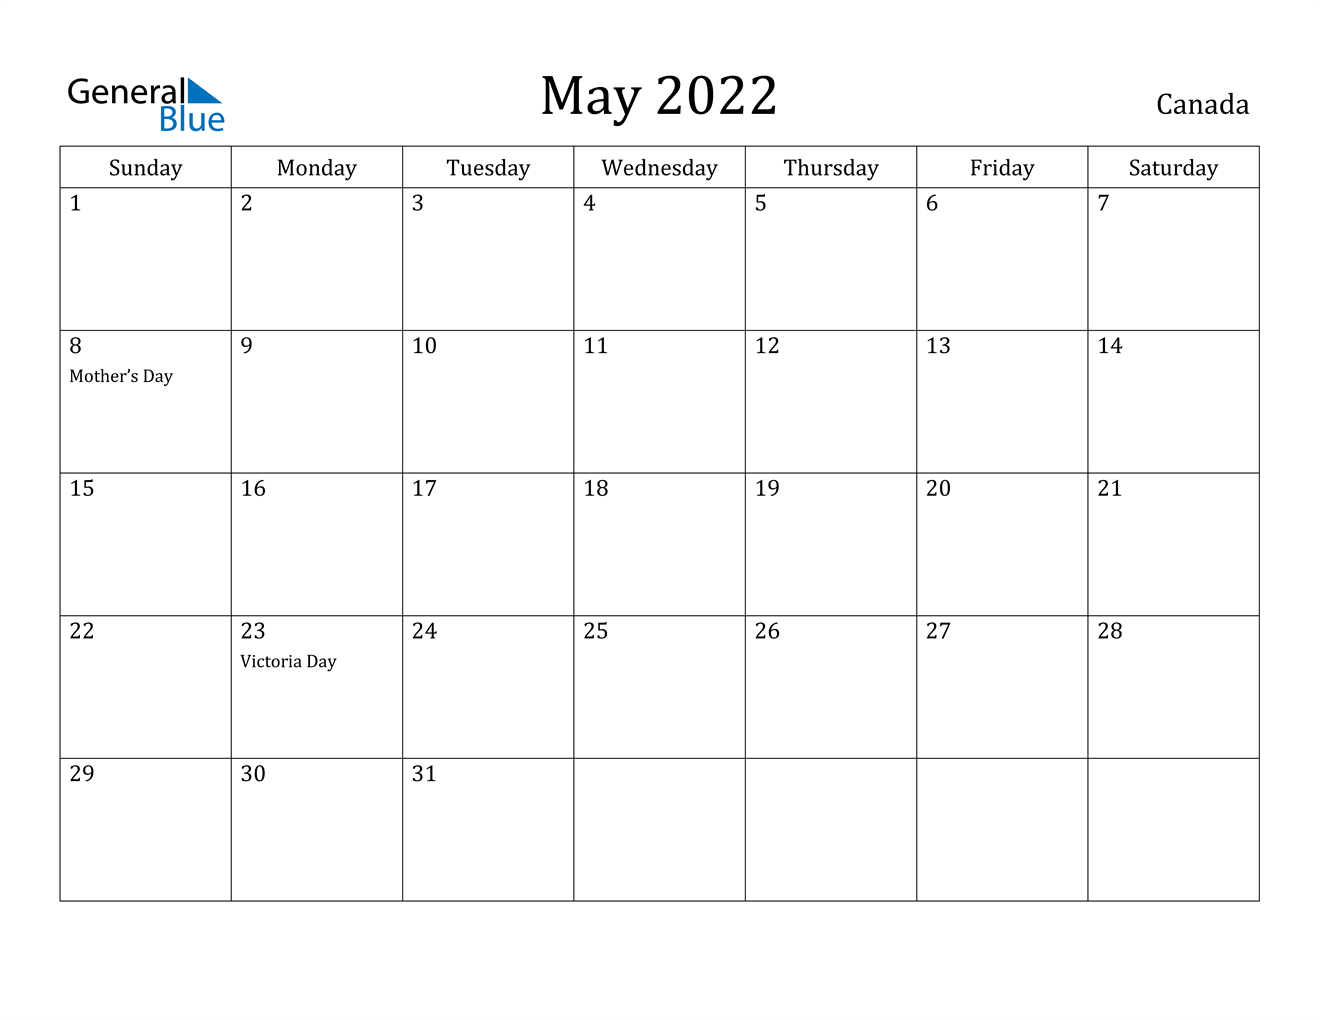 May 2022 Calendar - Canada